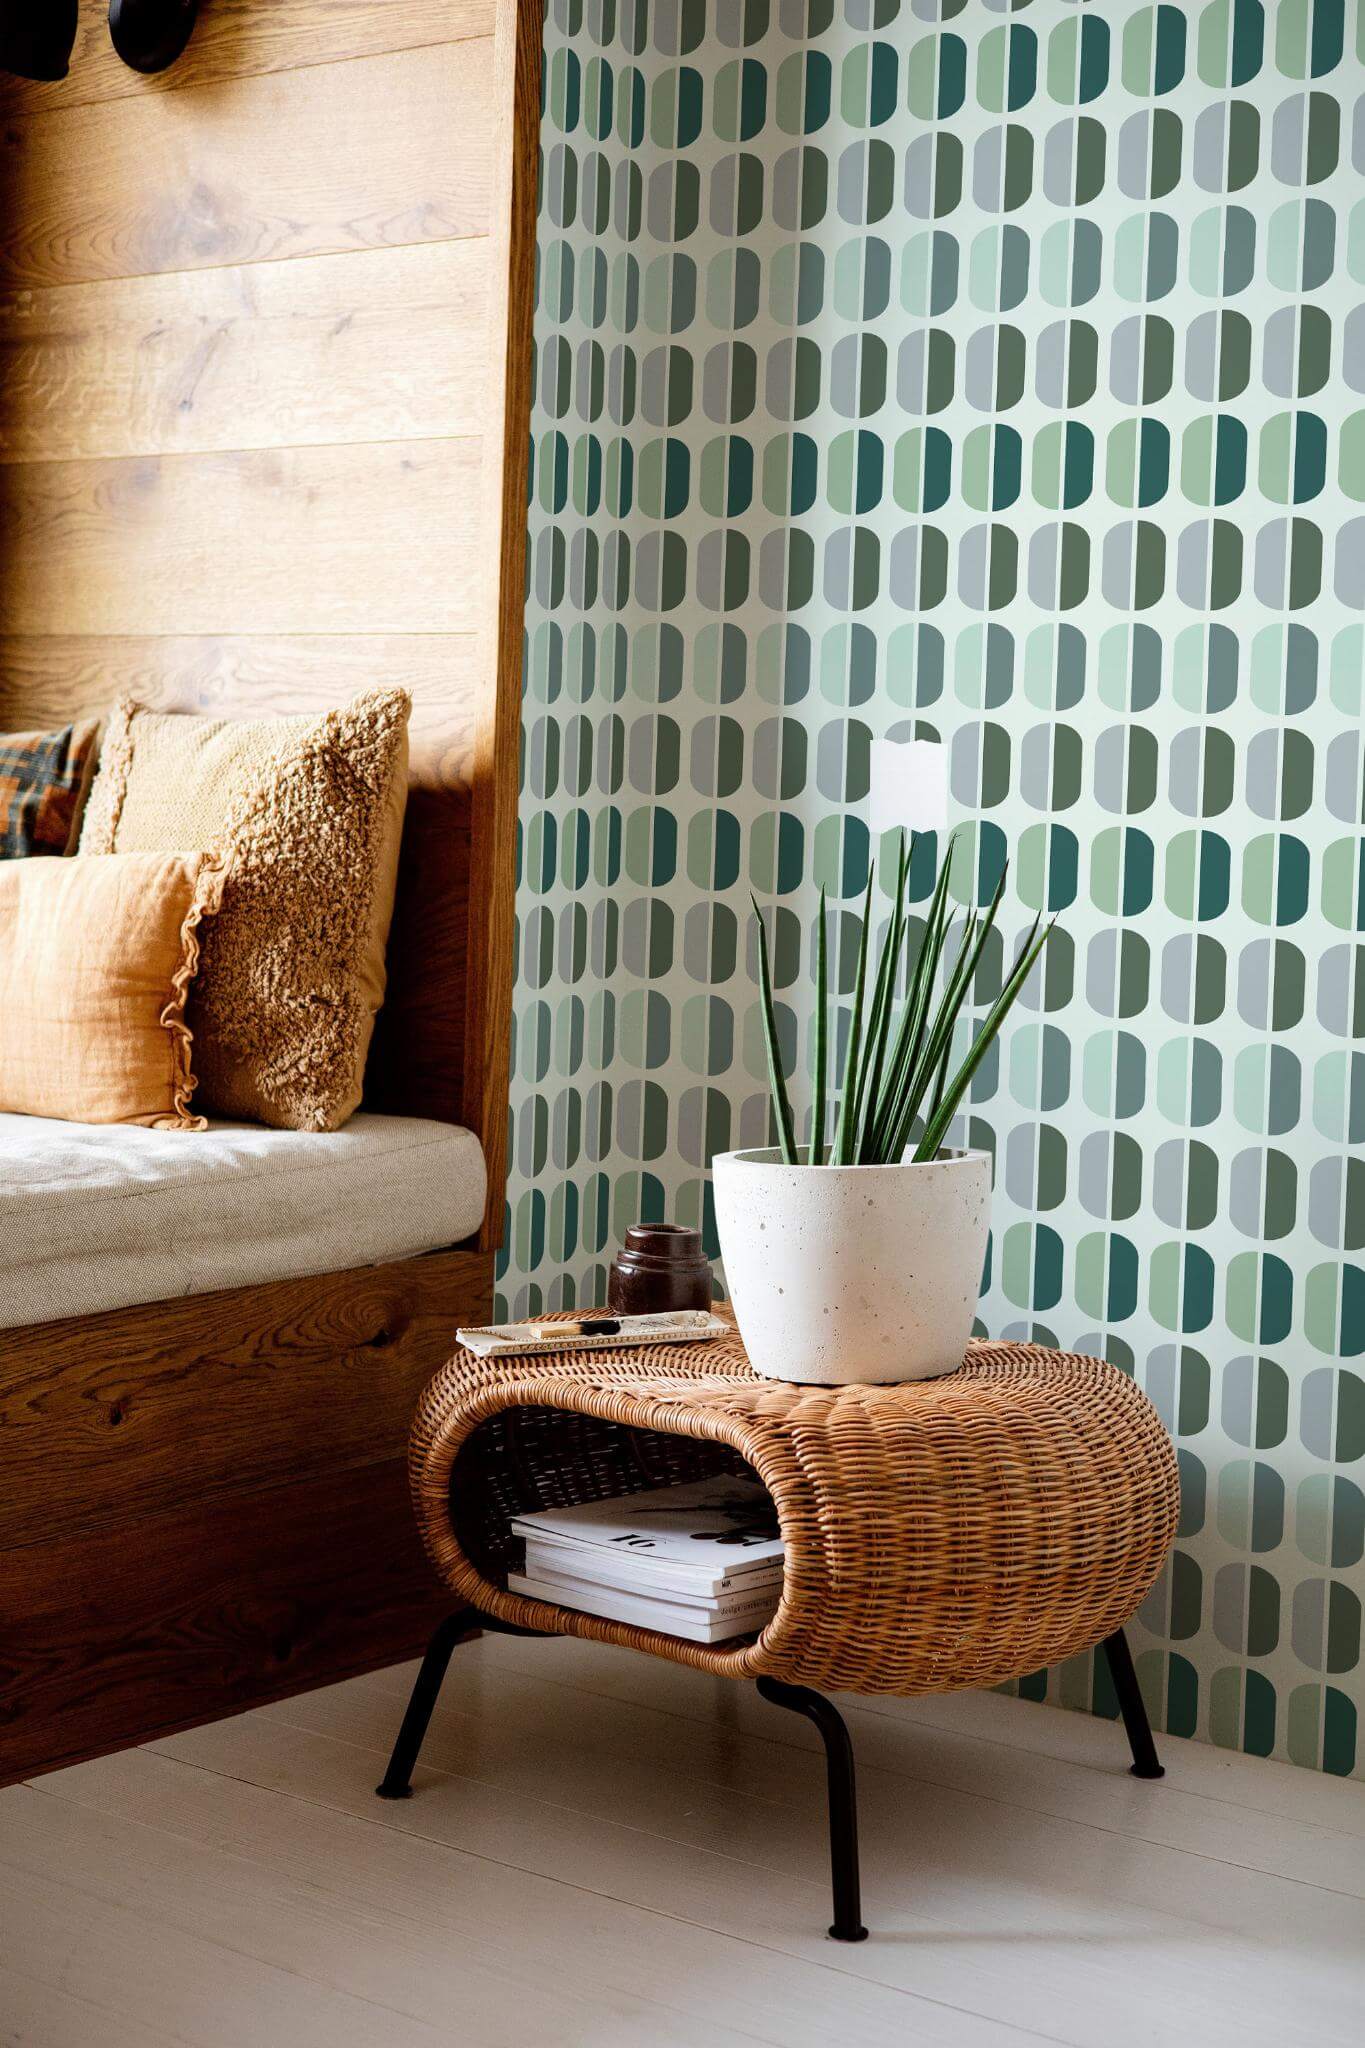 Green Art Deco Peel and Stick Wallpaper Sample - 19′′x19′′, PVC-Free